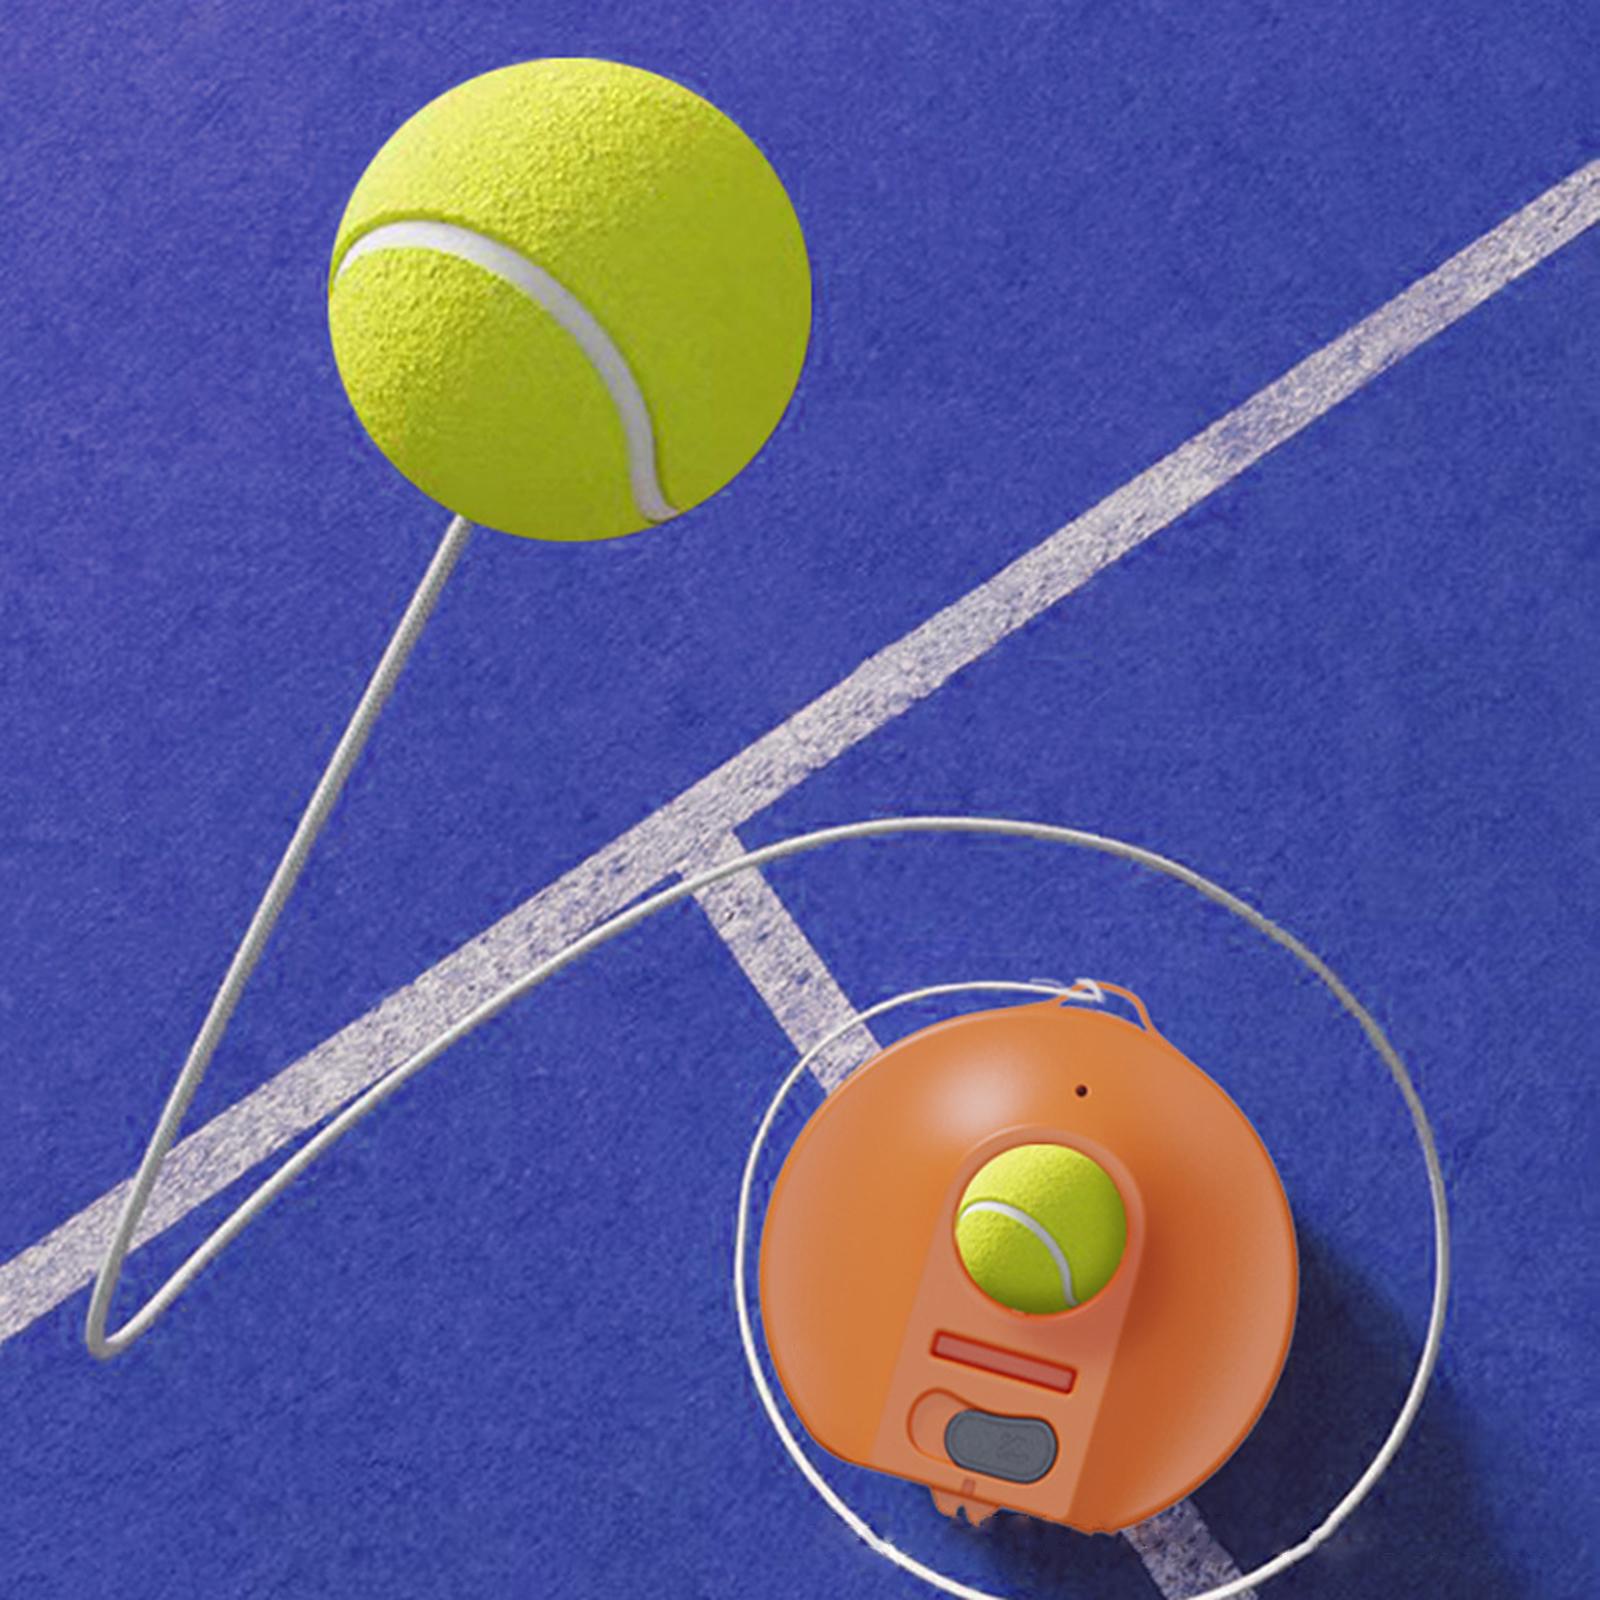 Single Tennis Ball Trainer Training Equipment Accessory Tennis Training Tool Orange